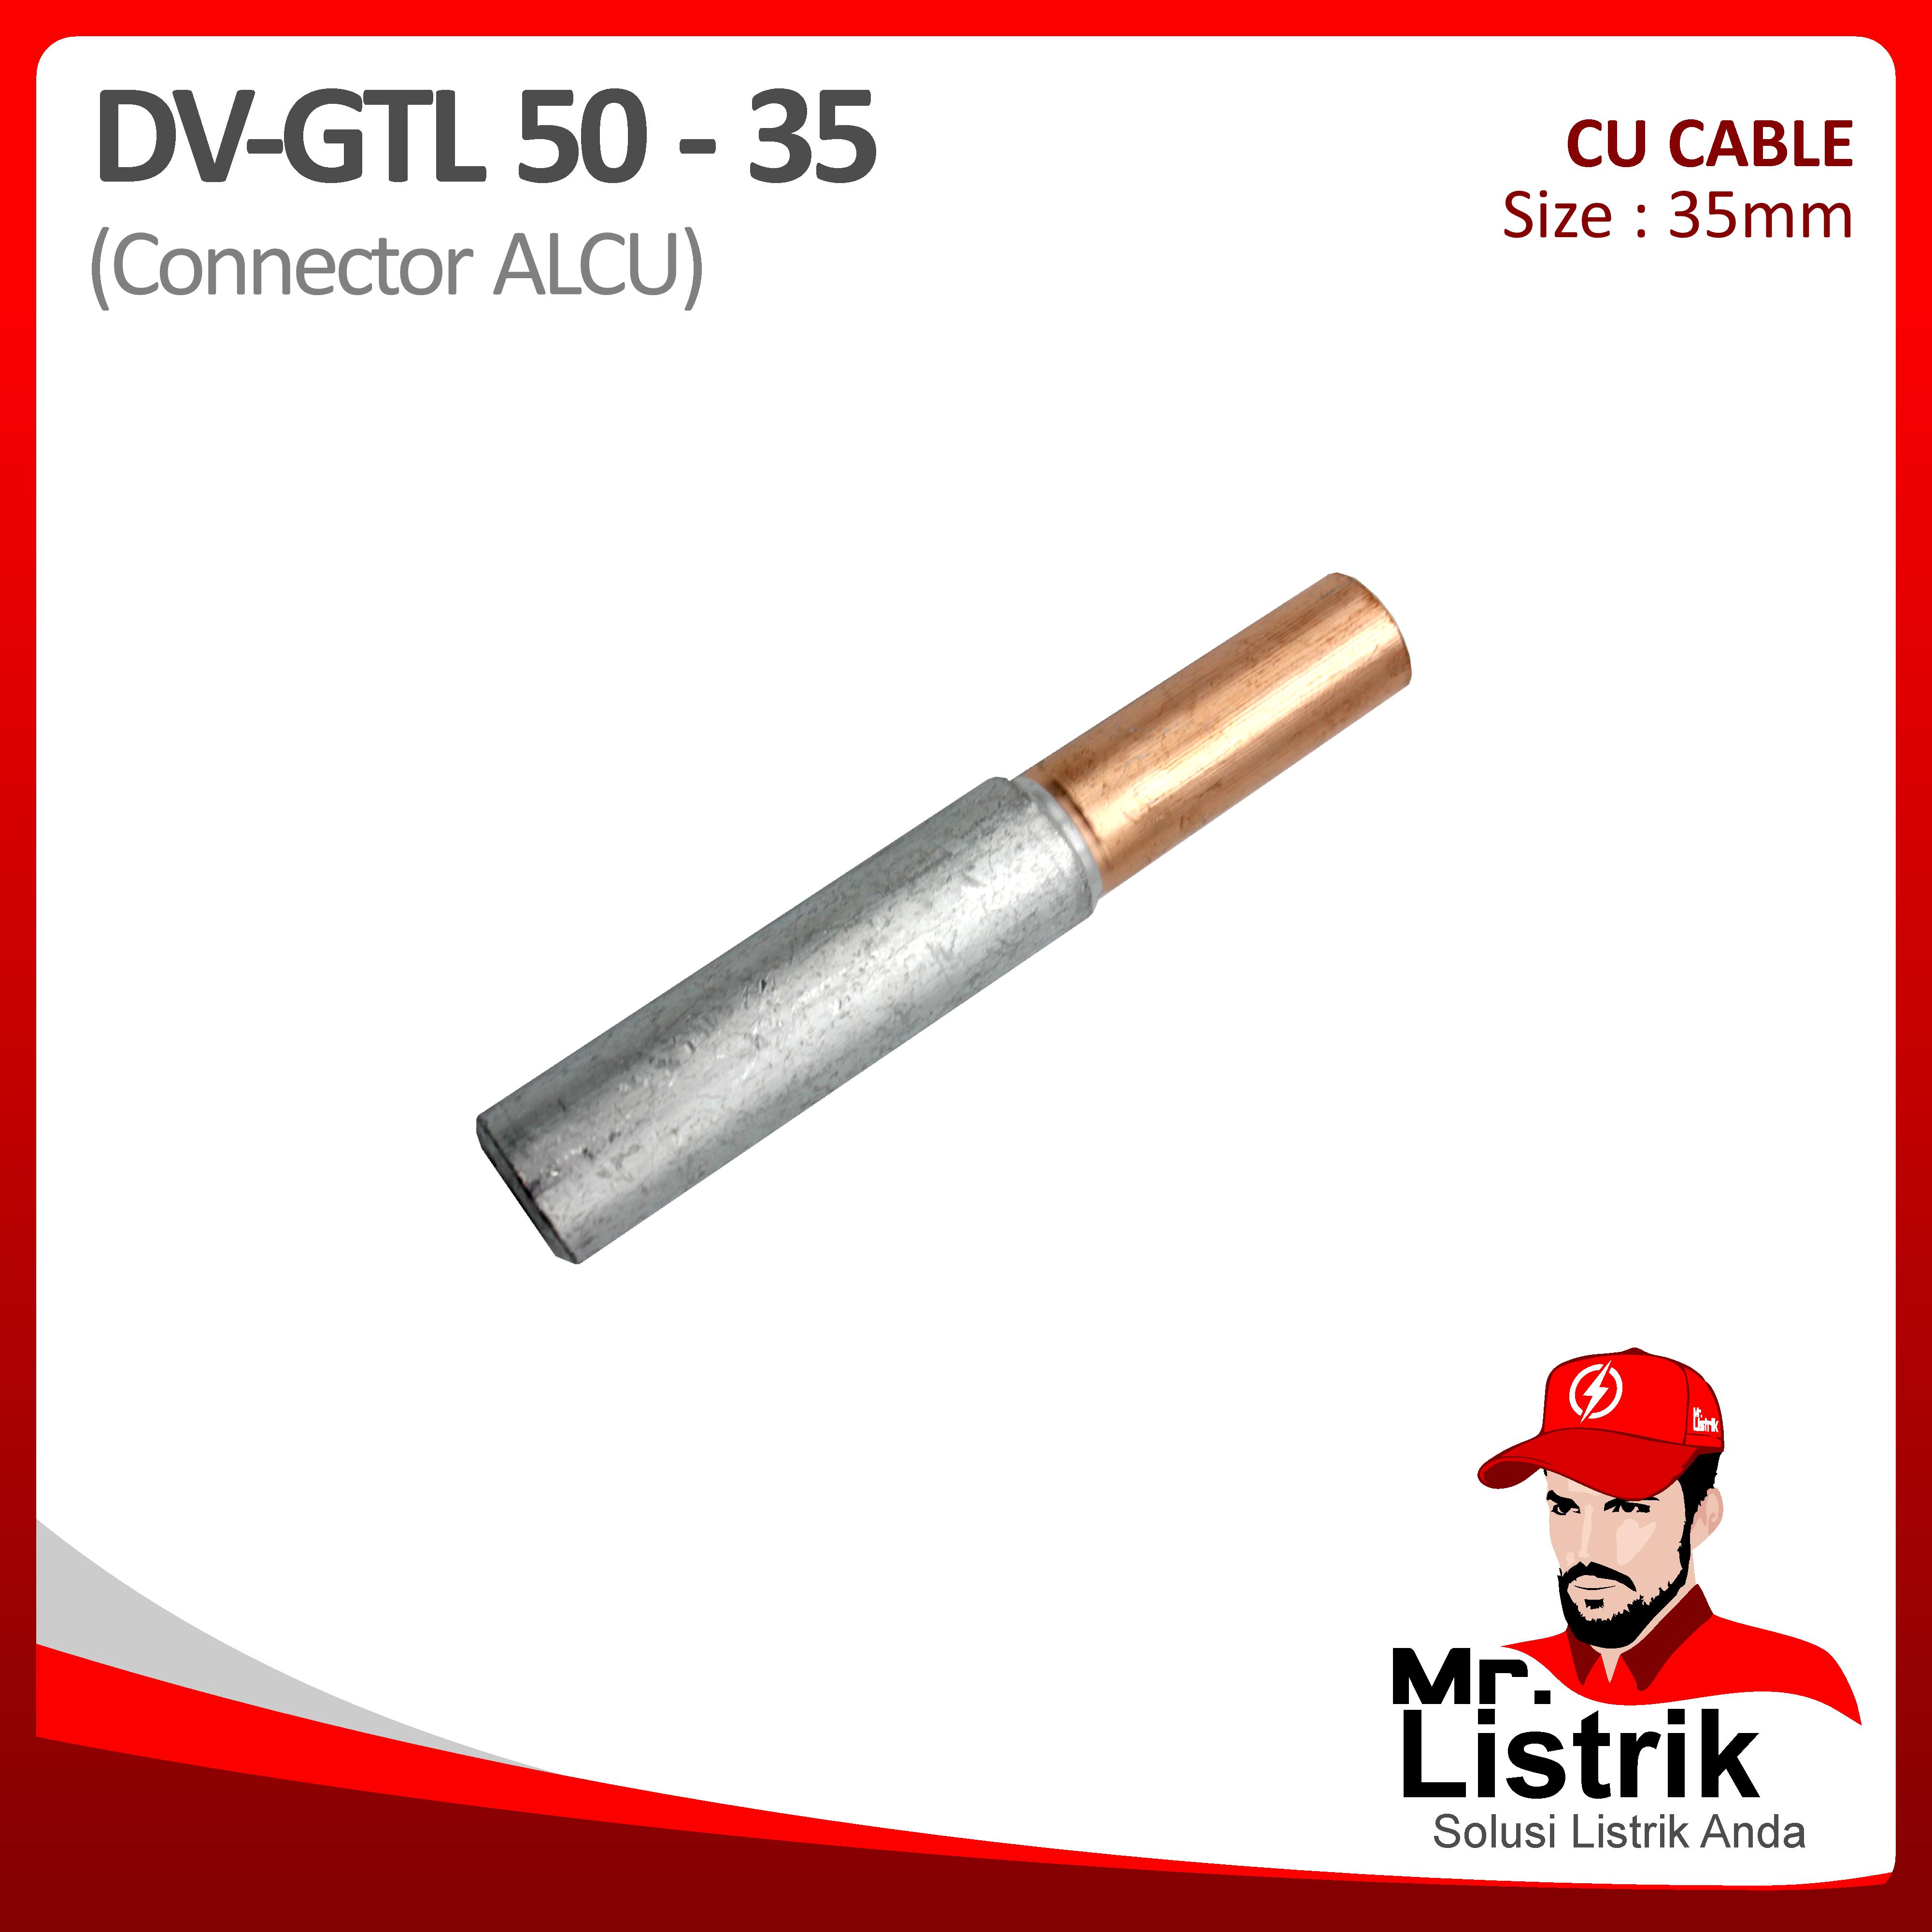 Connector ALCU 50mm DV GTL-50-35